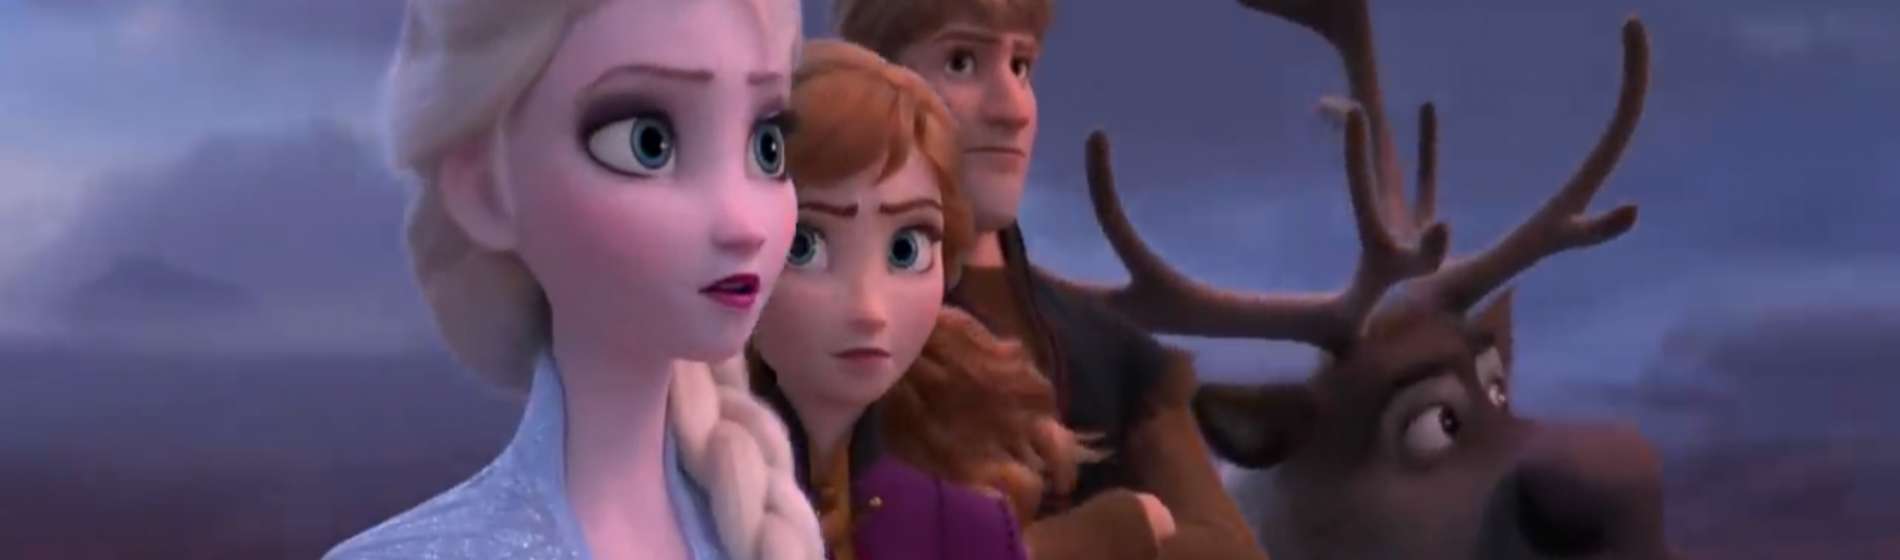 Frozen-2-Alt-Trailer-Image